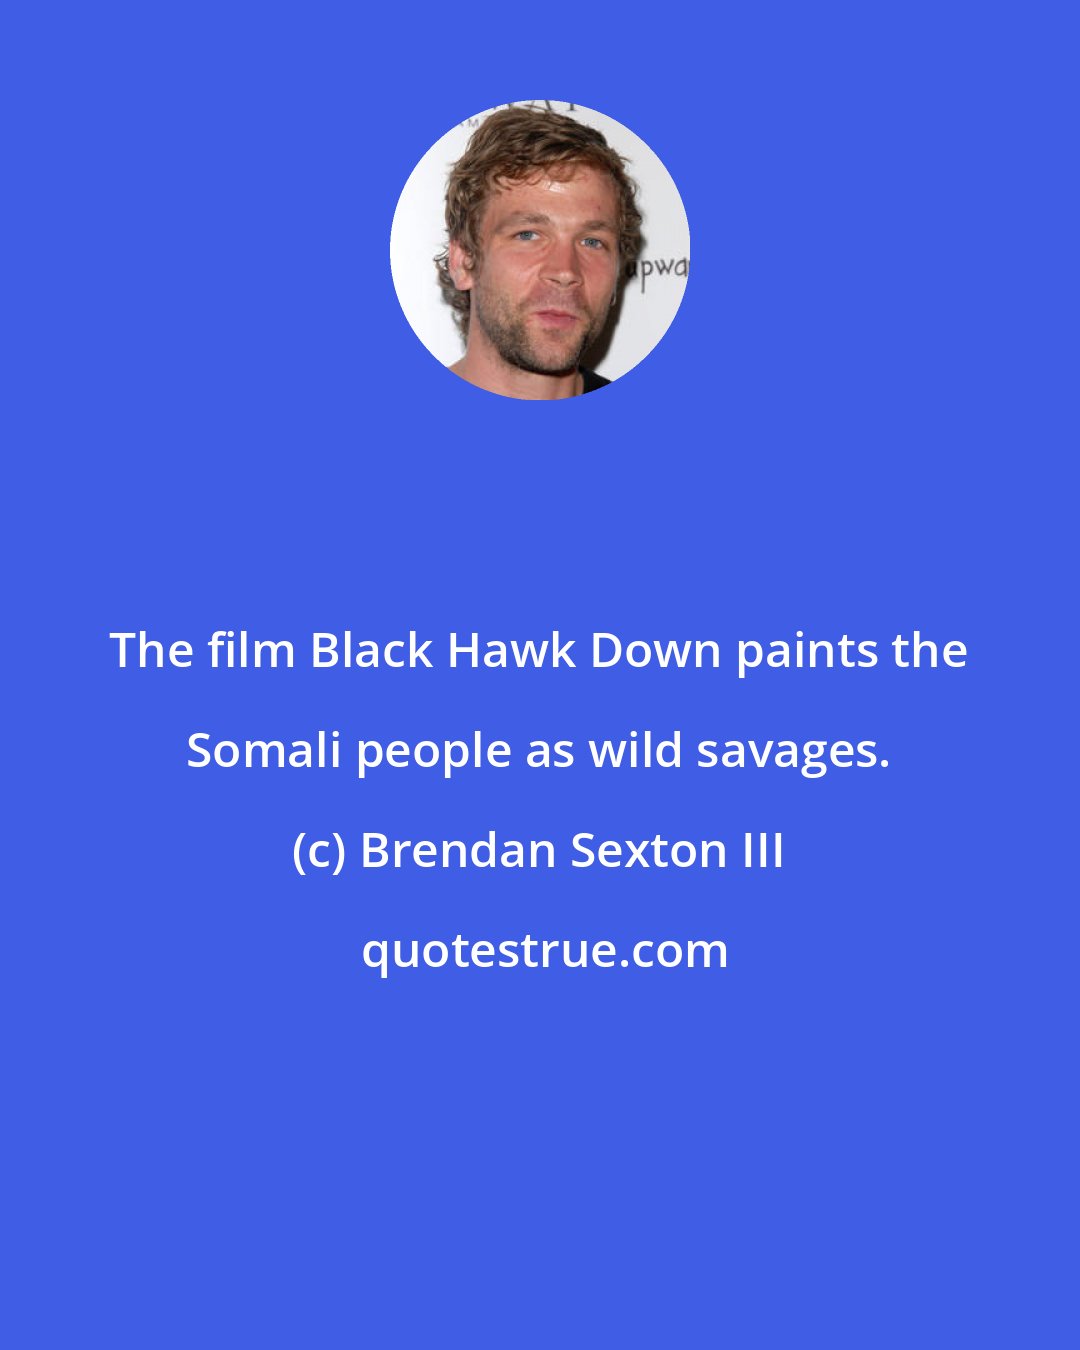 Brendan Sexton III: The film Black Hawk Down paints the Somali people as wild savages.